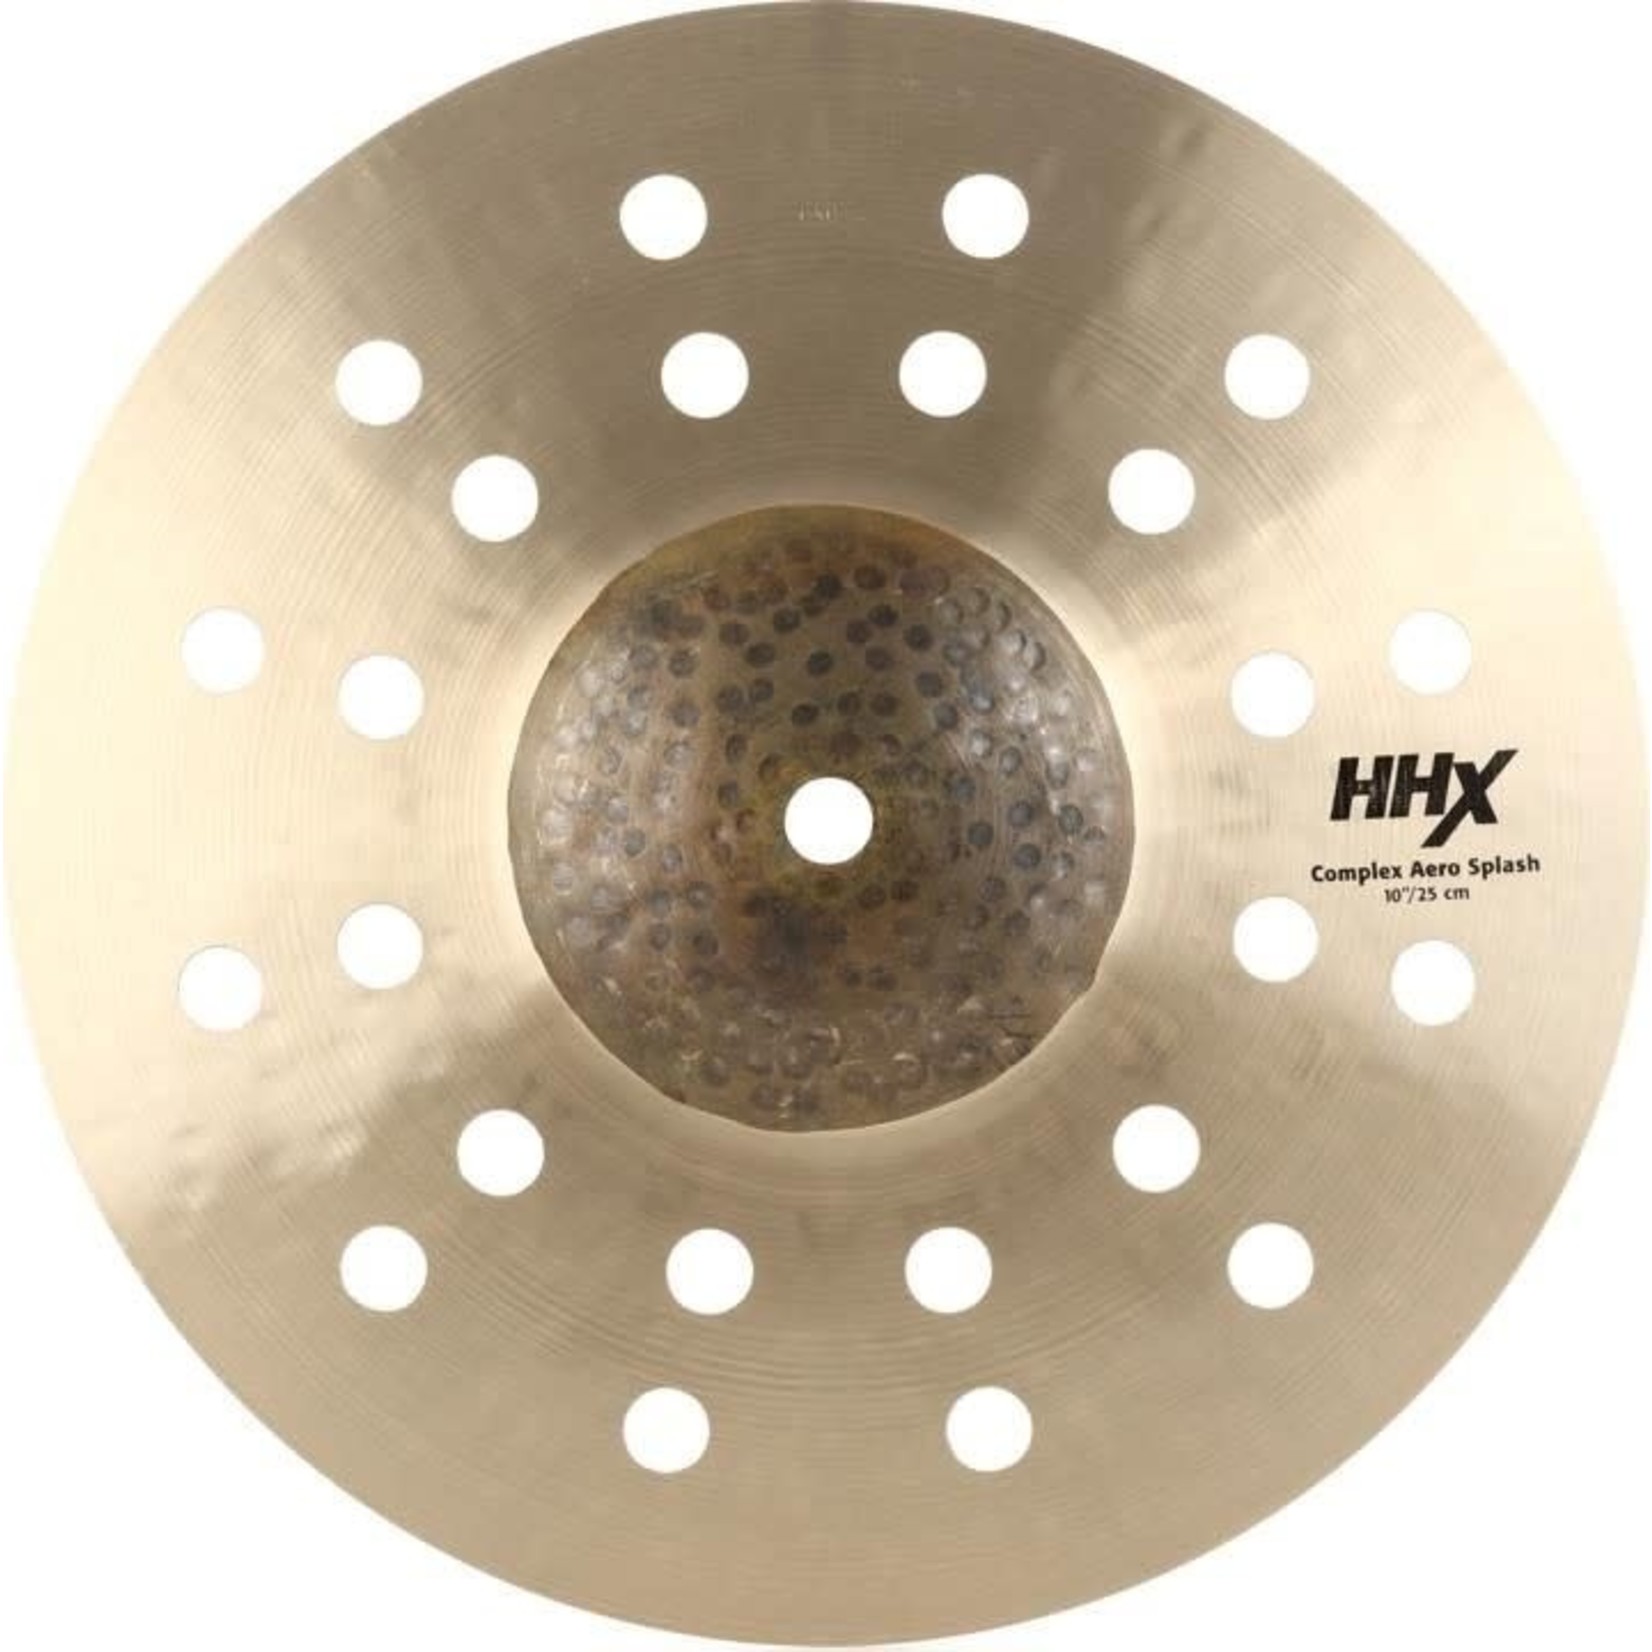 Sabian Sabian HHX 10" Complex Aero Splash Cymbal